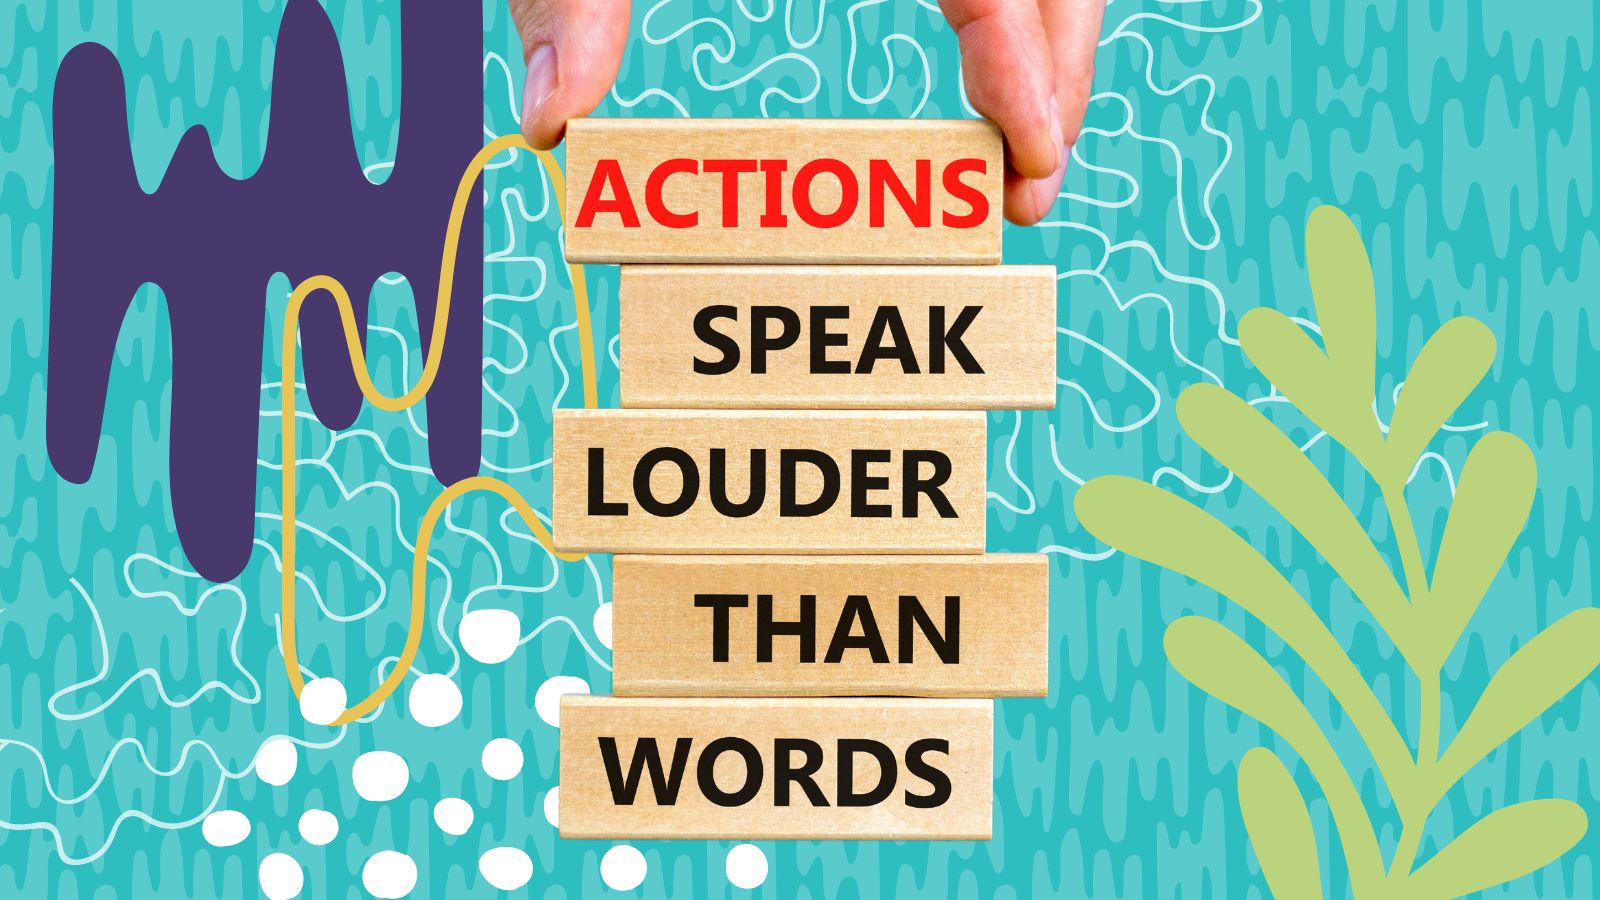 8THIRTYFOUR Actions Speak Louder than Words Blog Wooden blocks with the words actions speak louder than words onthem